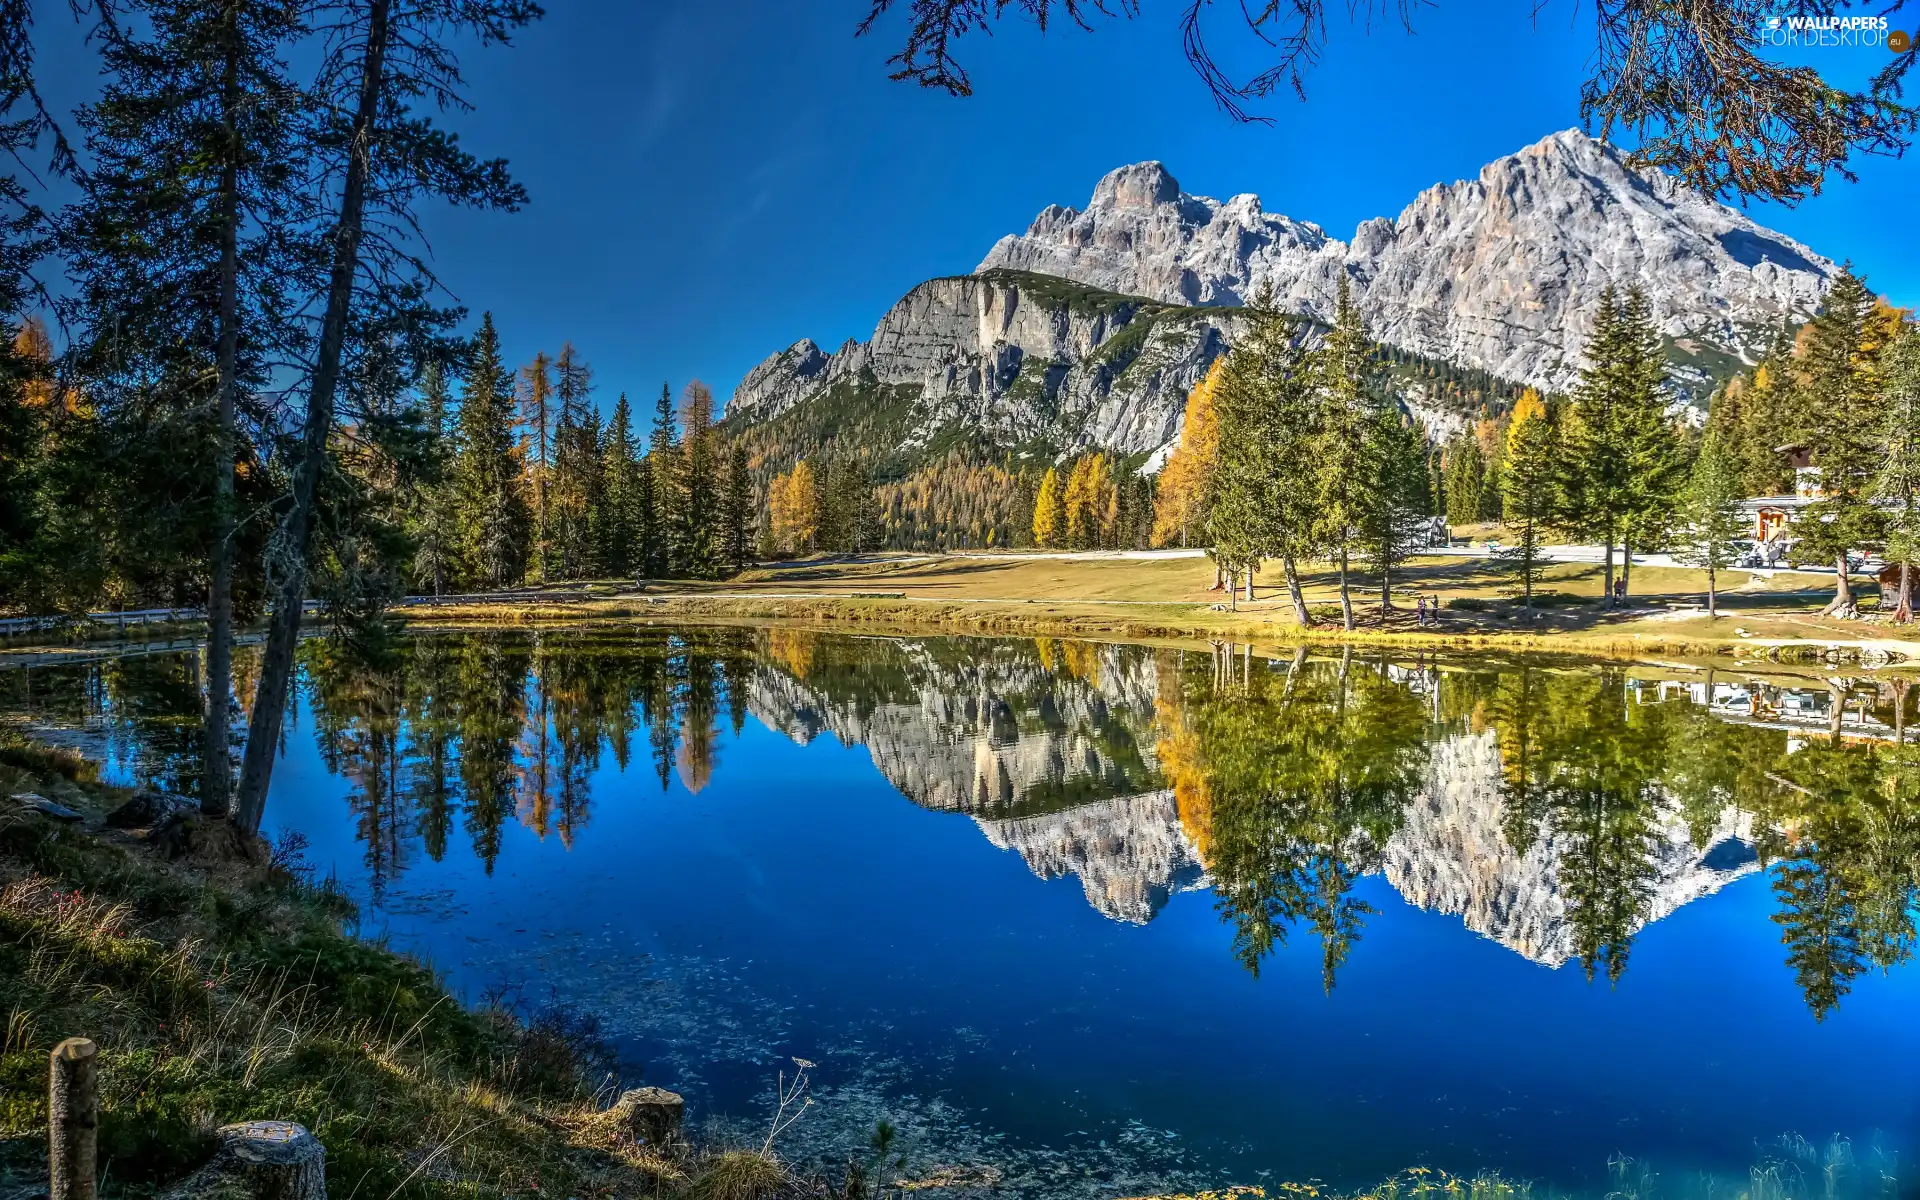 Mountains, trees, grass, viewes, autumn, lake, reflection